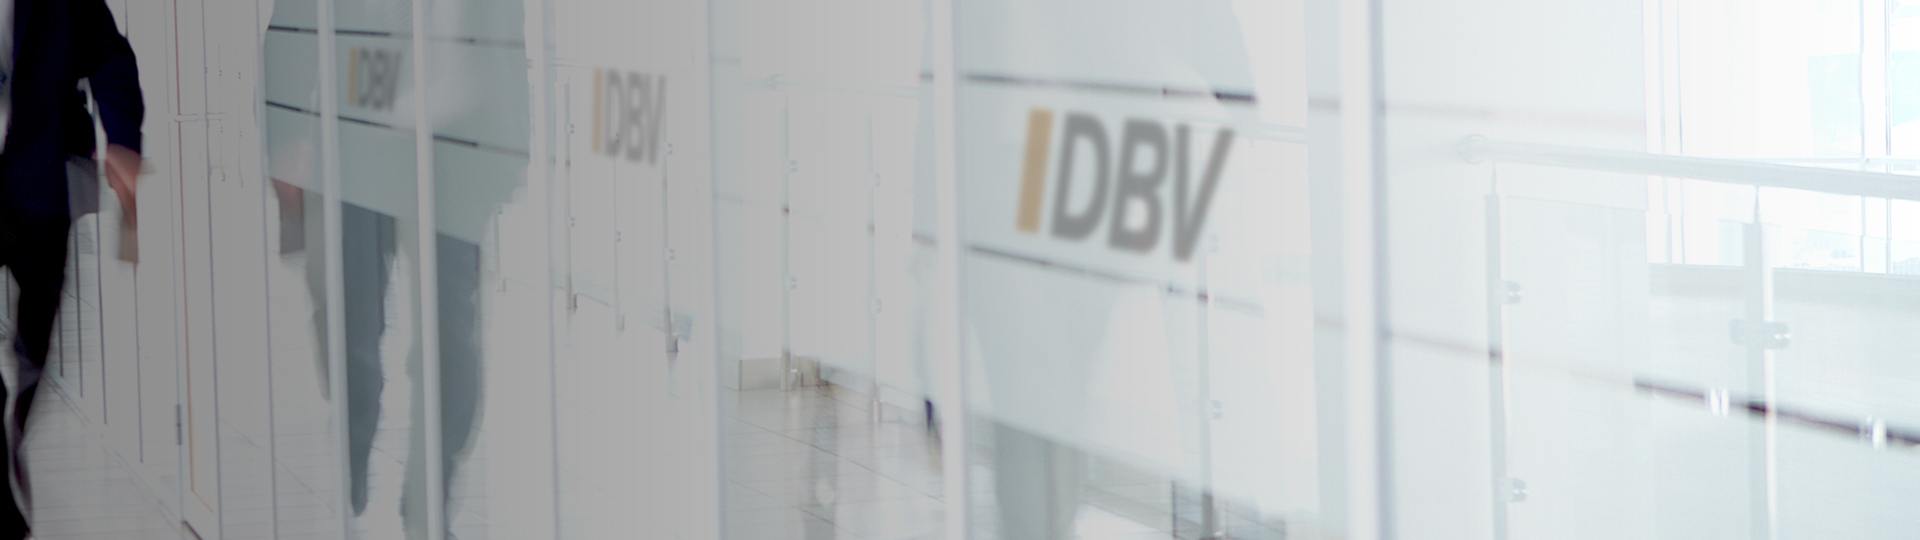 Private Krankenversicherung | DBV Bonn Dietmar Kaiser